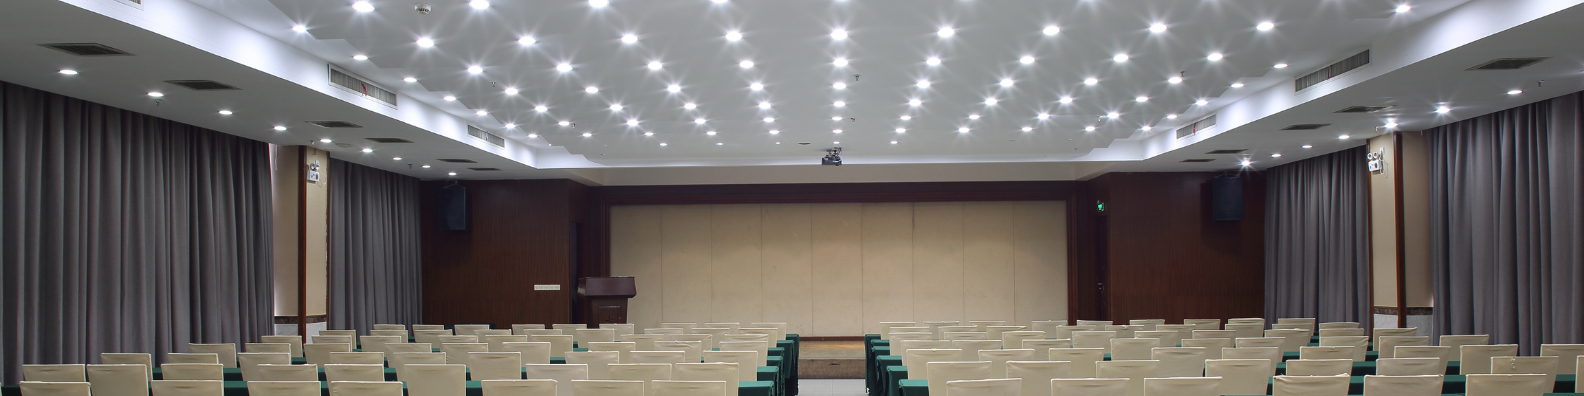 best led lights for auditorium